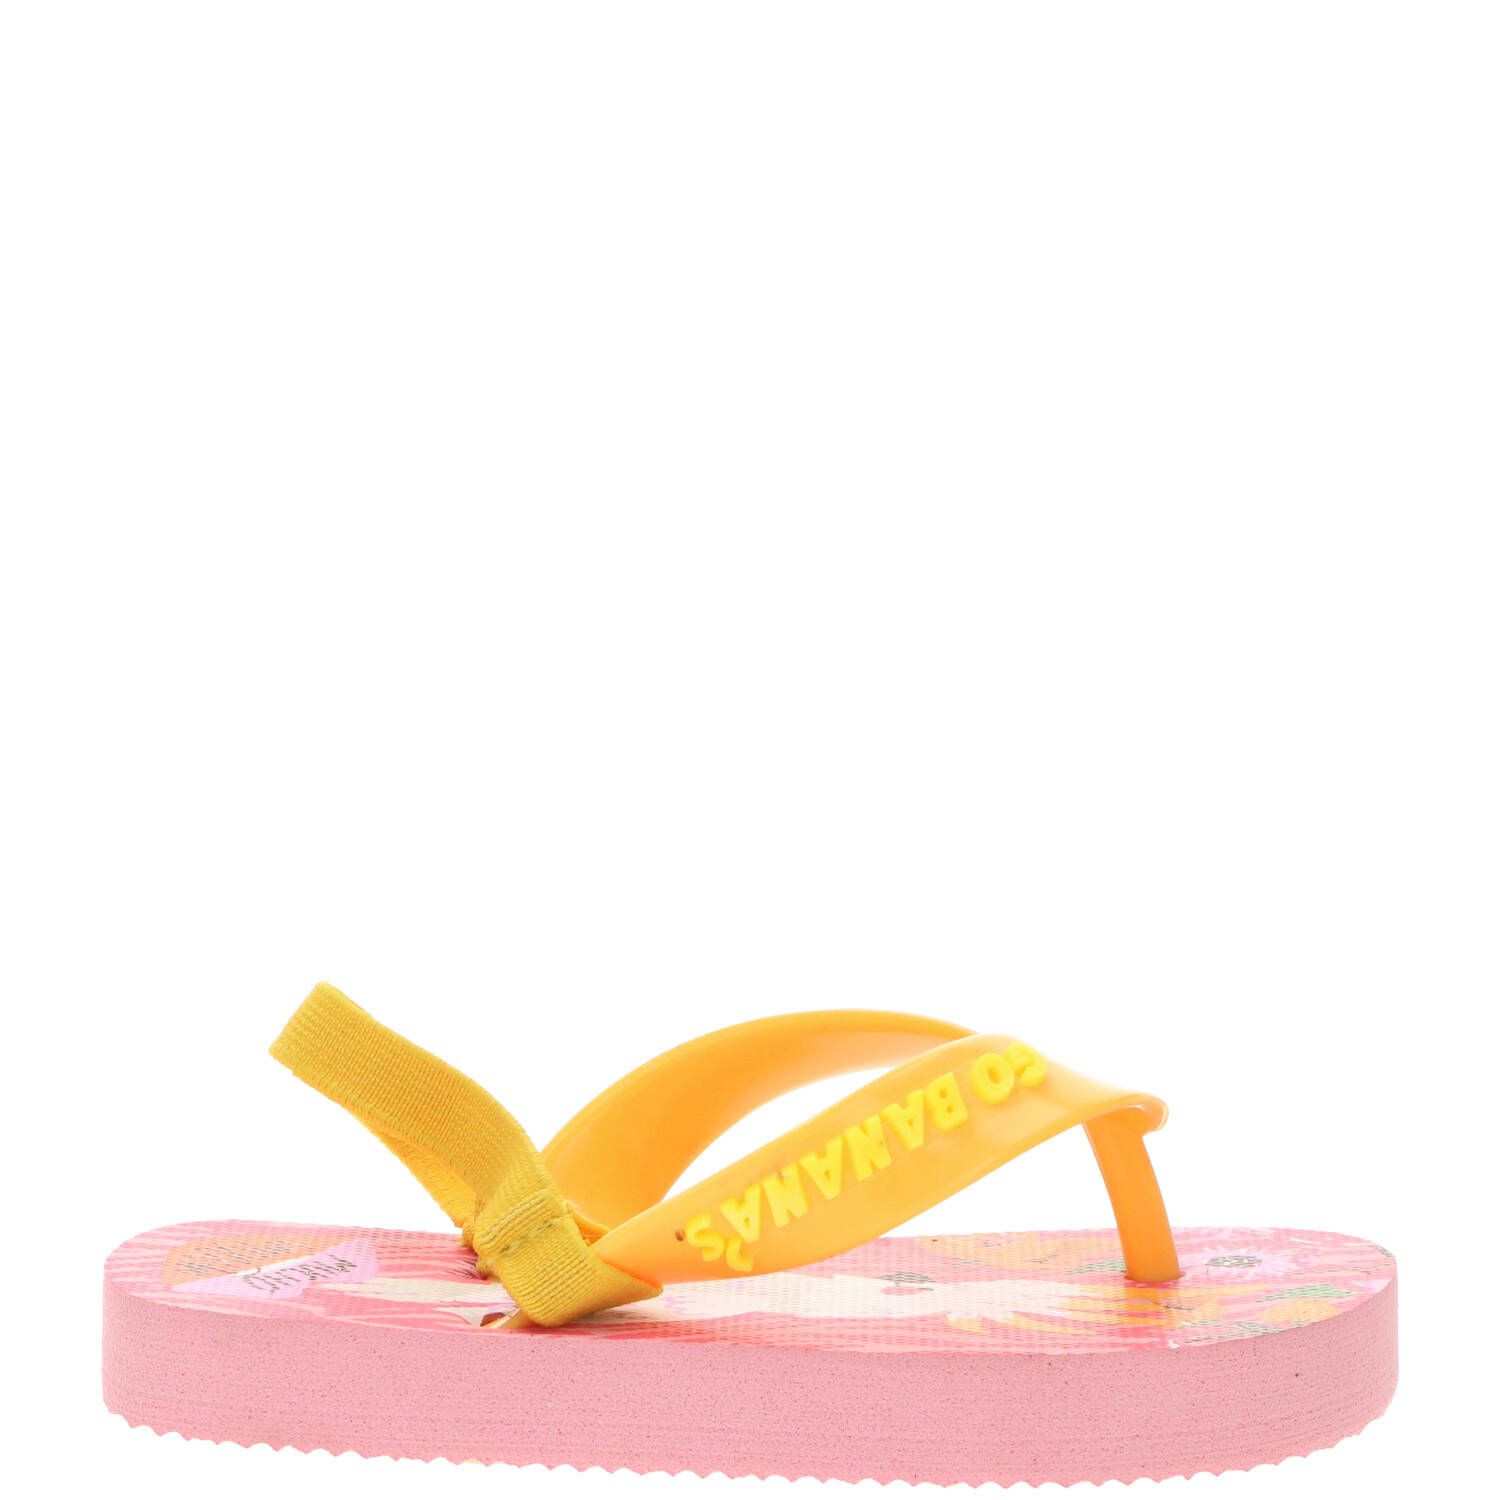 Go Banana's kakatoe slipper, Slippers, Meisje, Maat 23, roze/multi